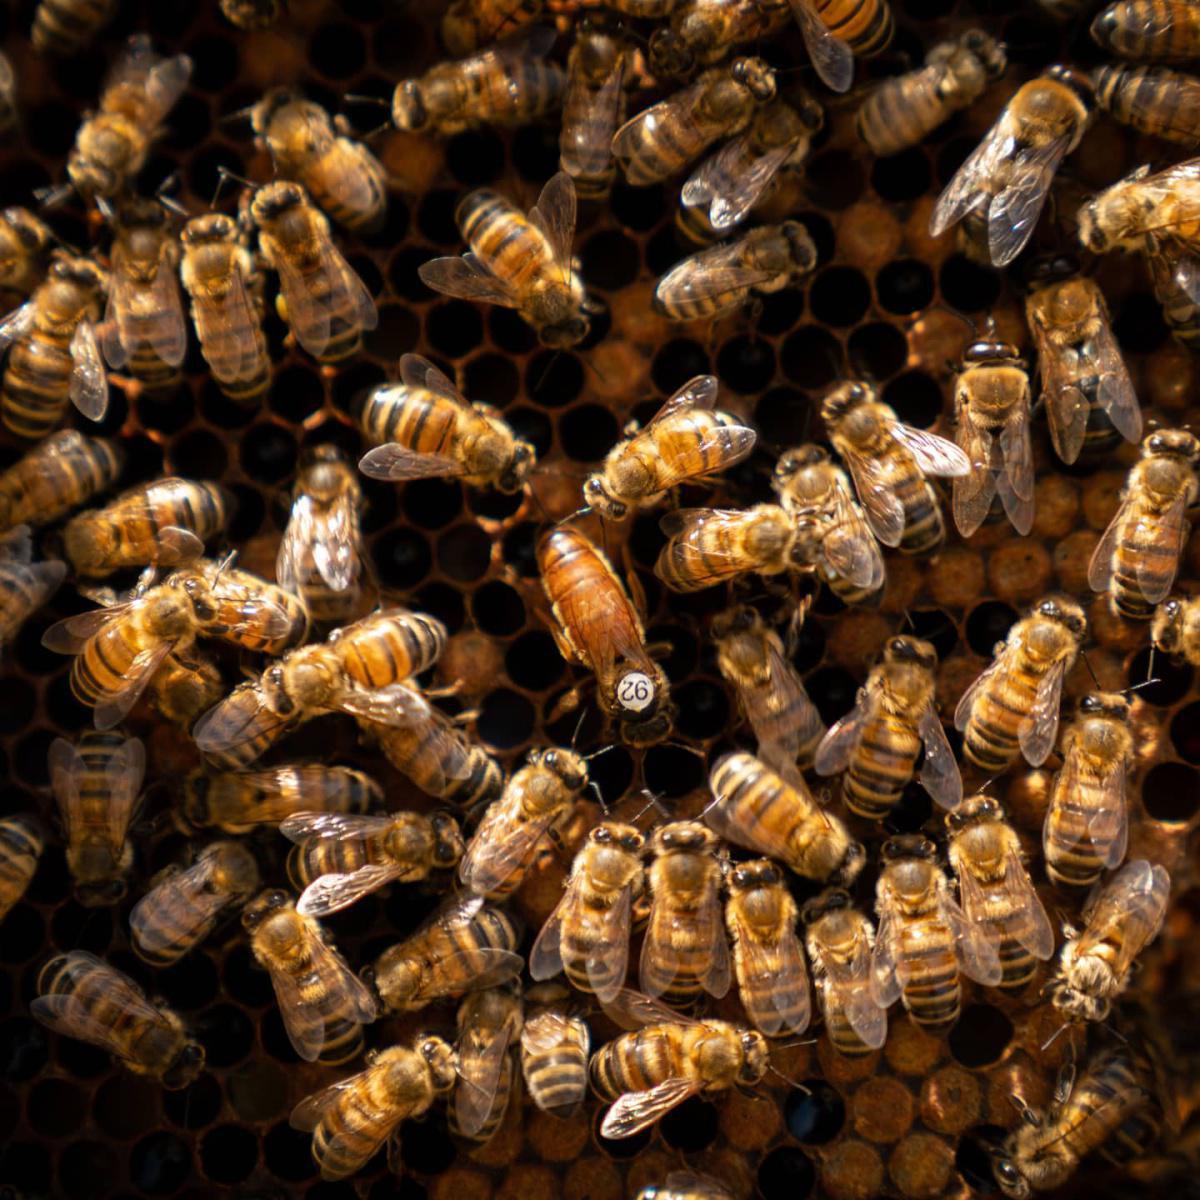 Les ruches mathildya